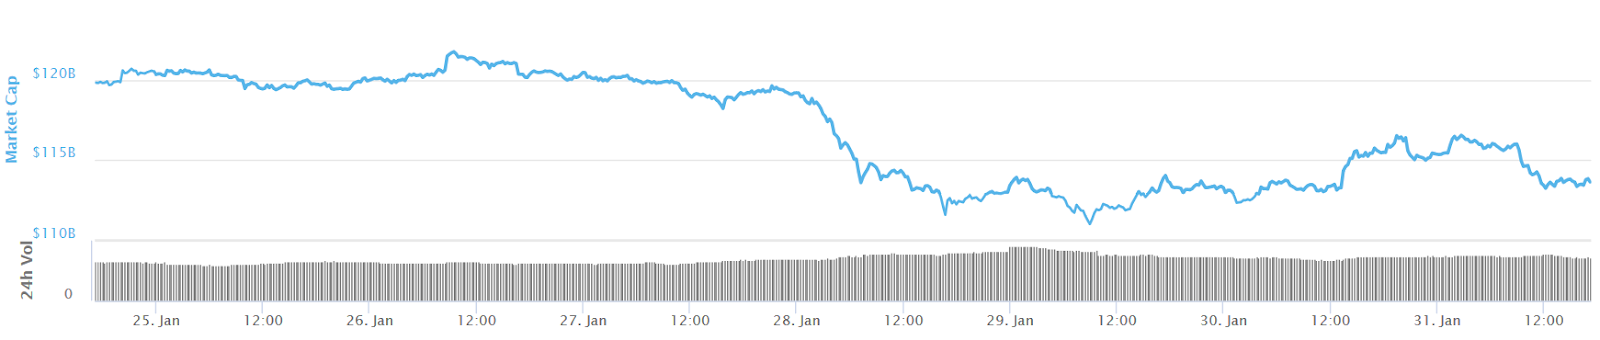 Total crypto market cap 7-day chart. Source: CoinMarketCap